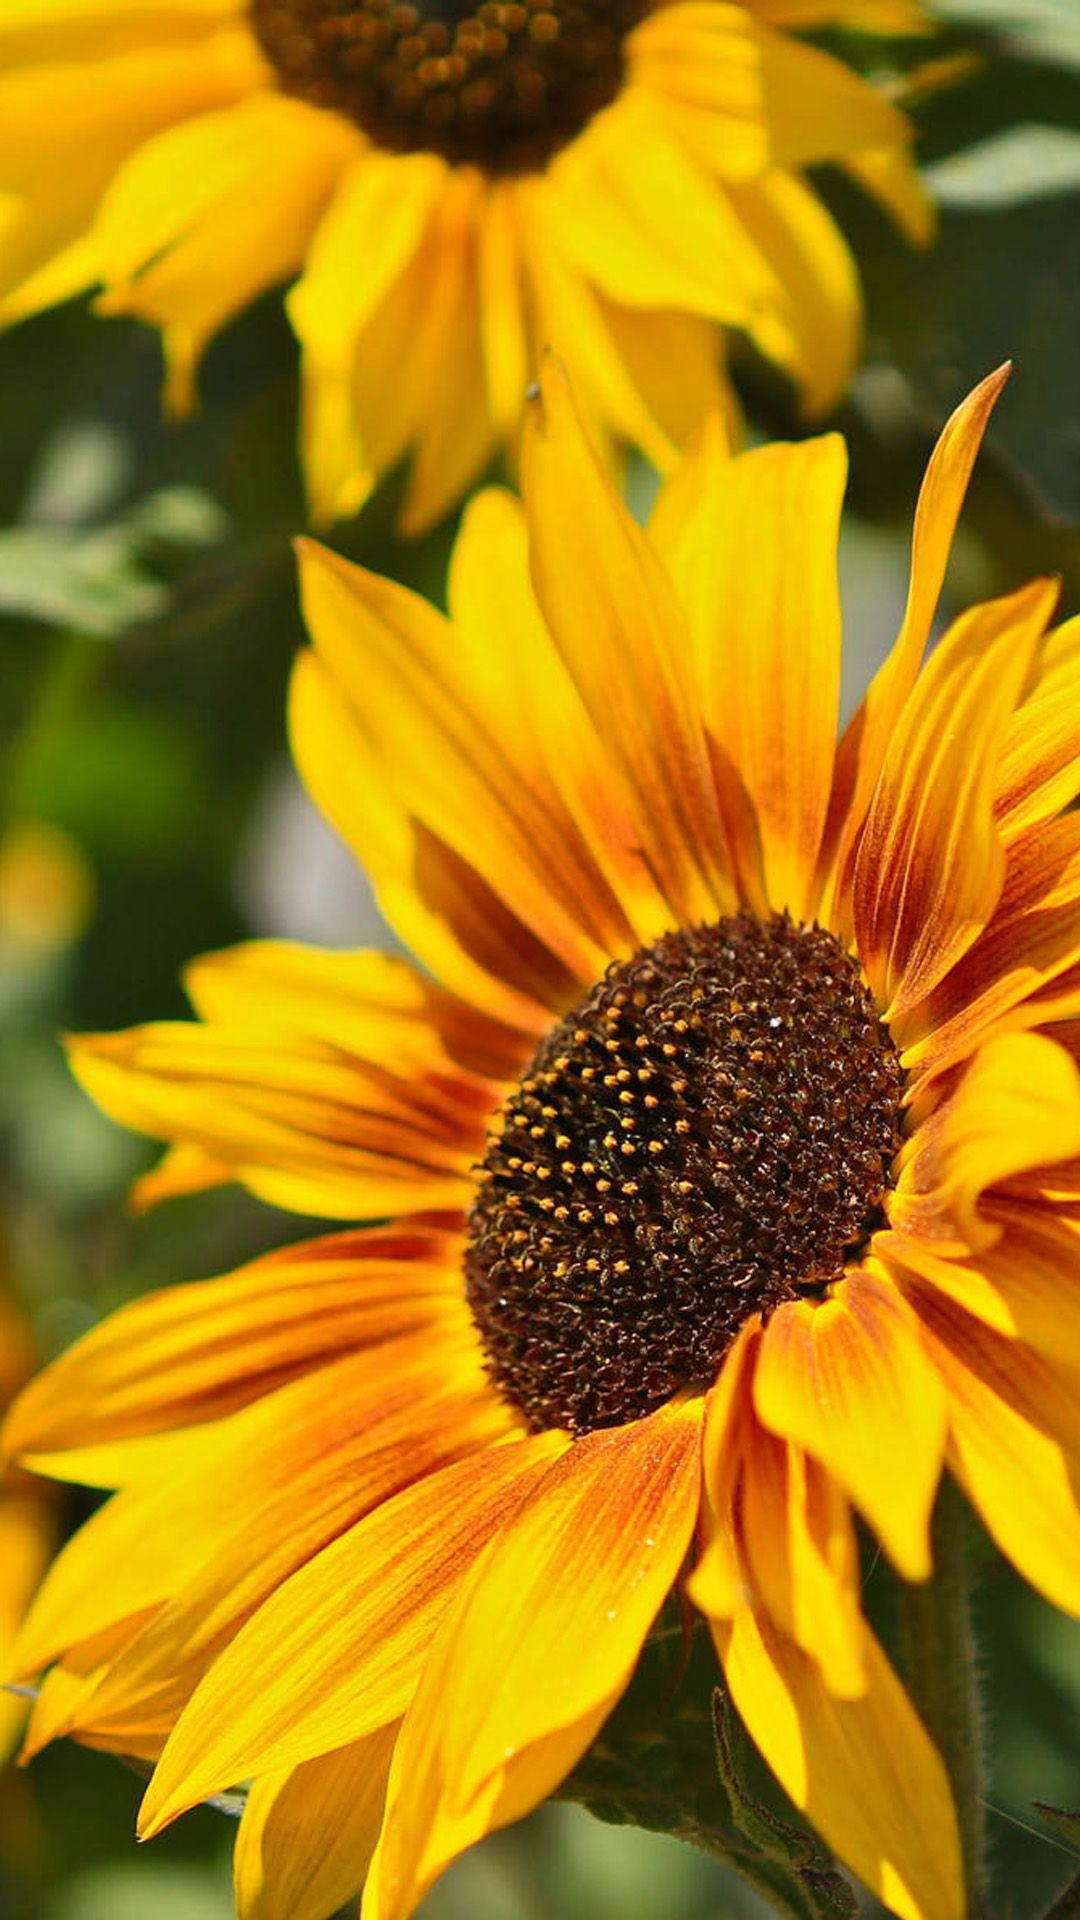 Sunflower flower macro photography wallpaper